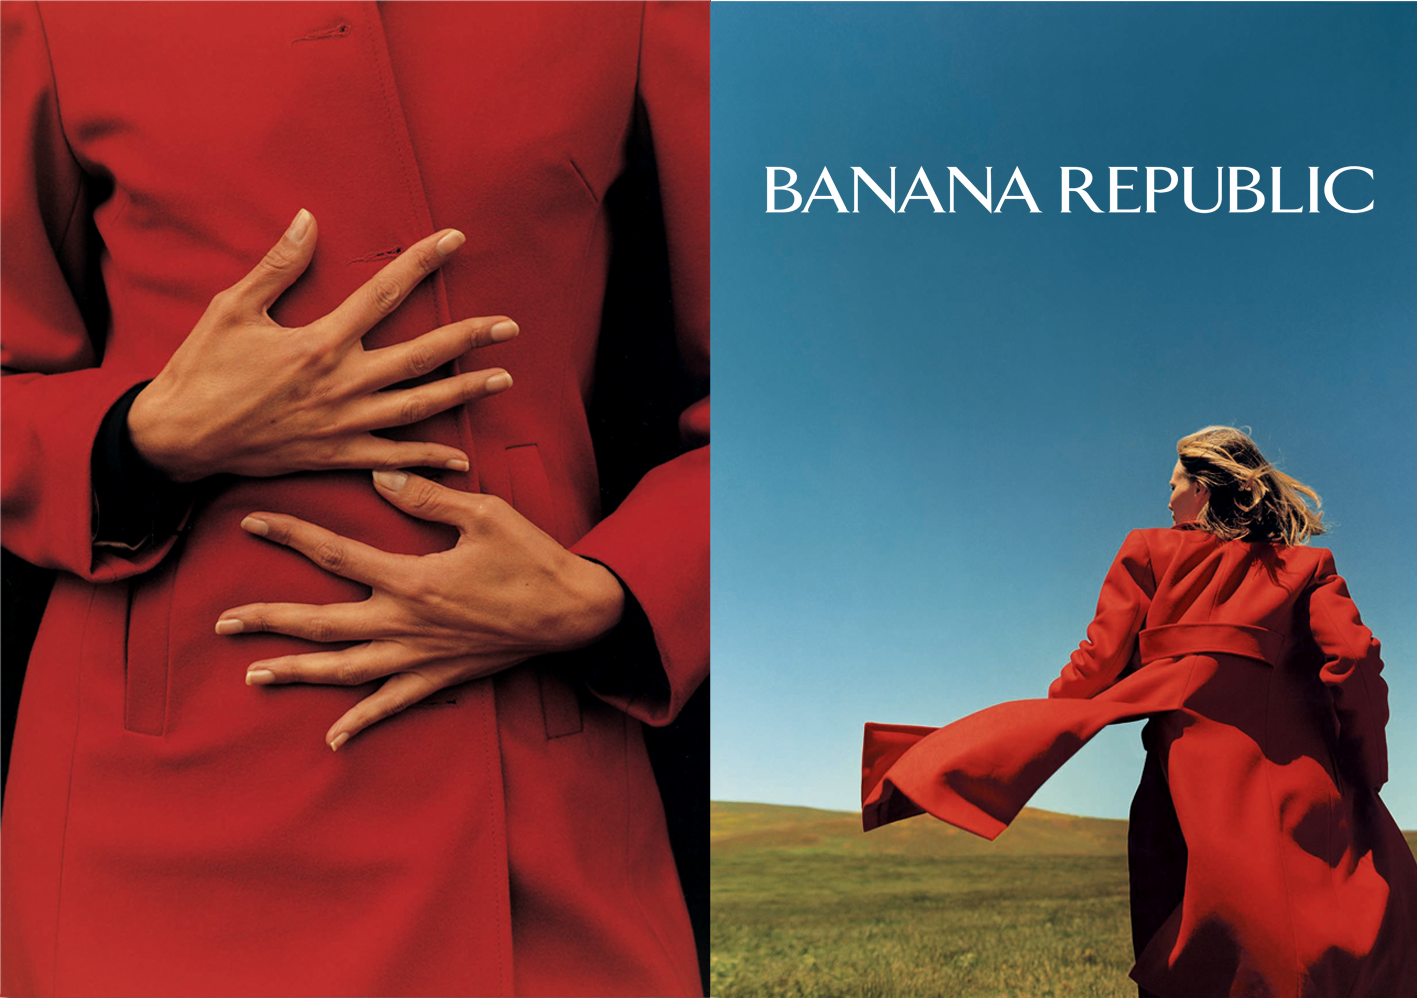 banana-republic-ad-campaign-by-koto-bolofo.png